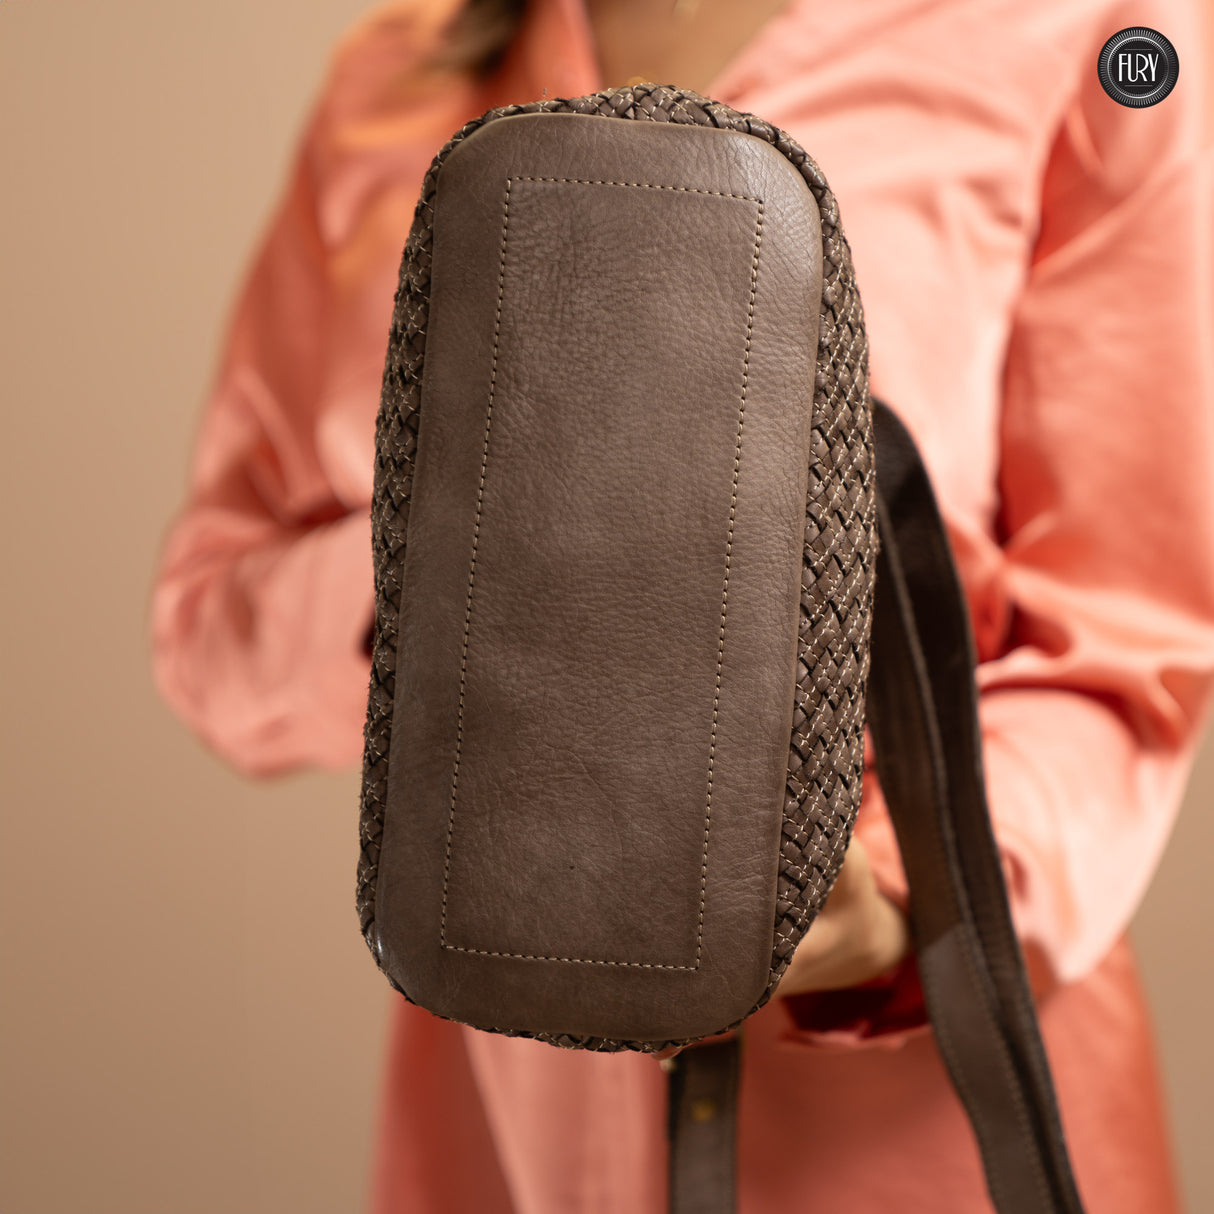 Agata handbag in woven leather